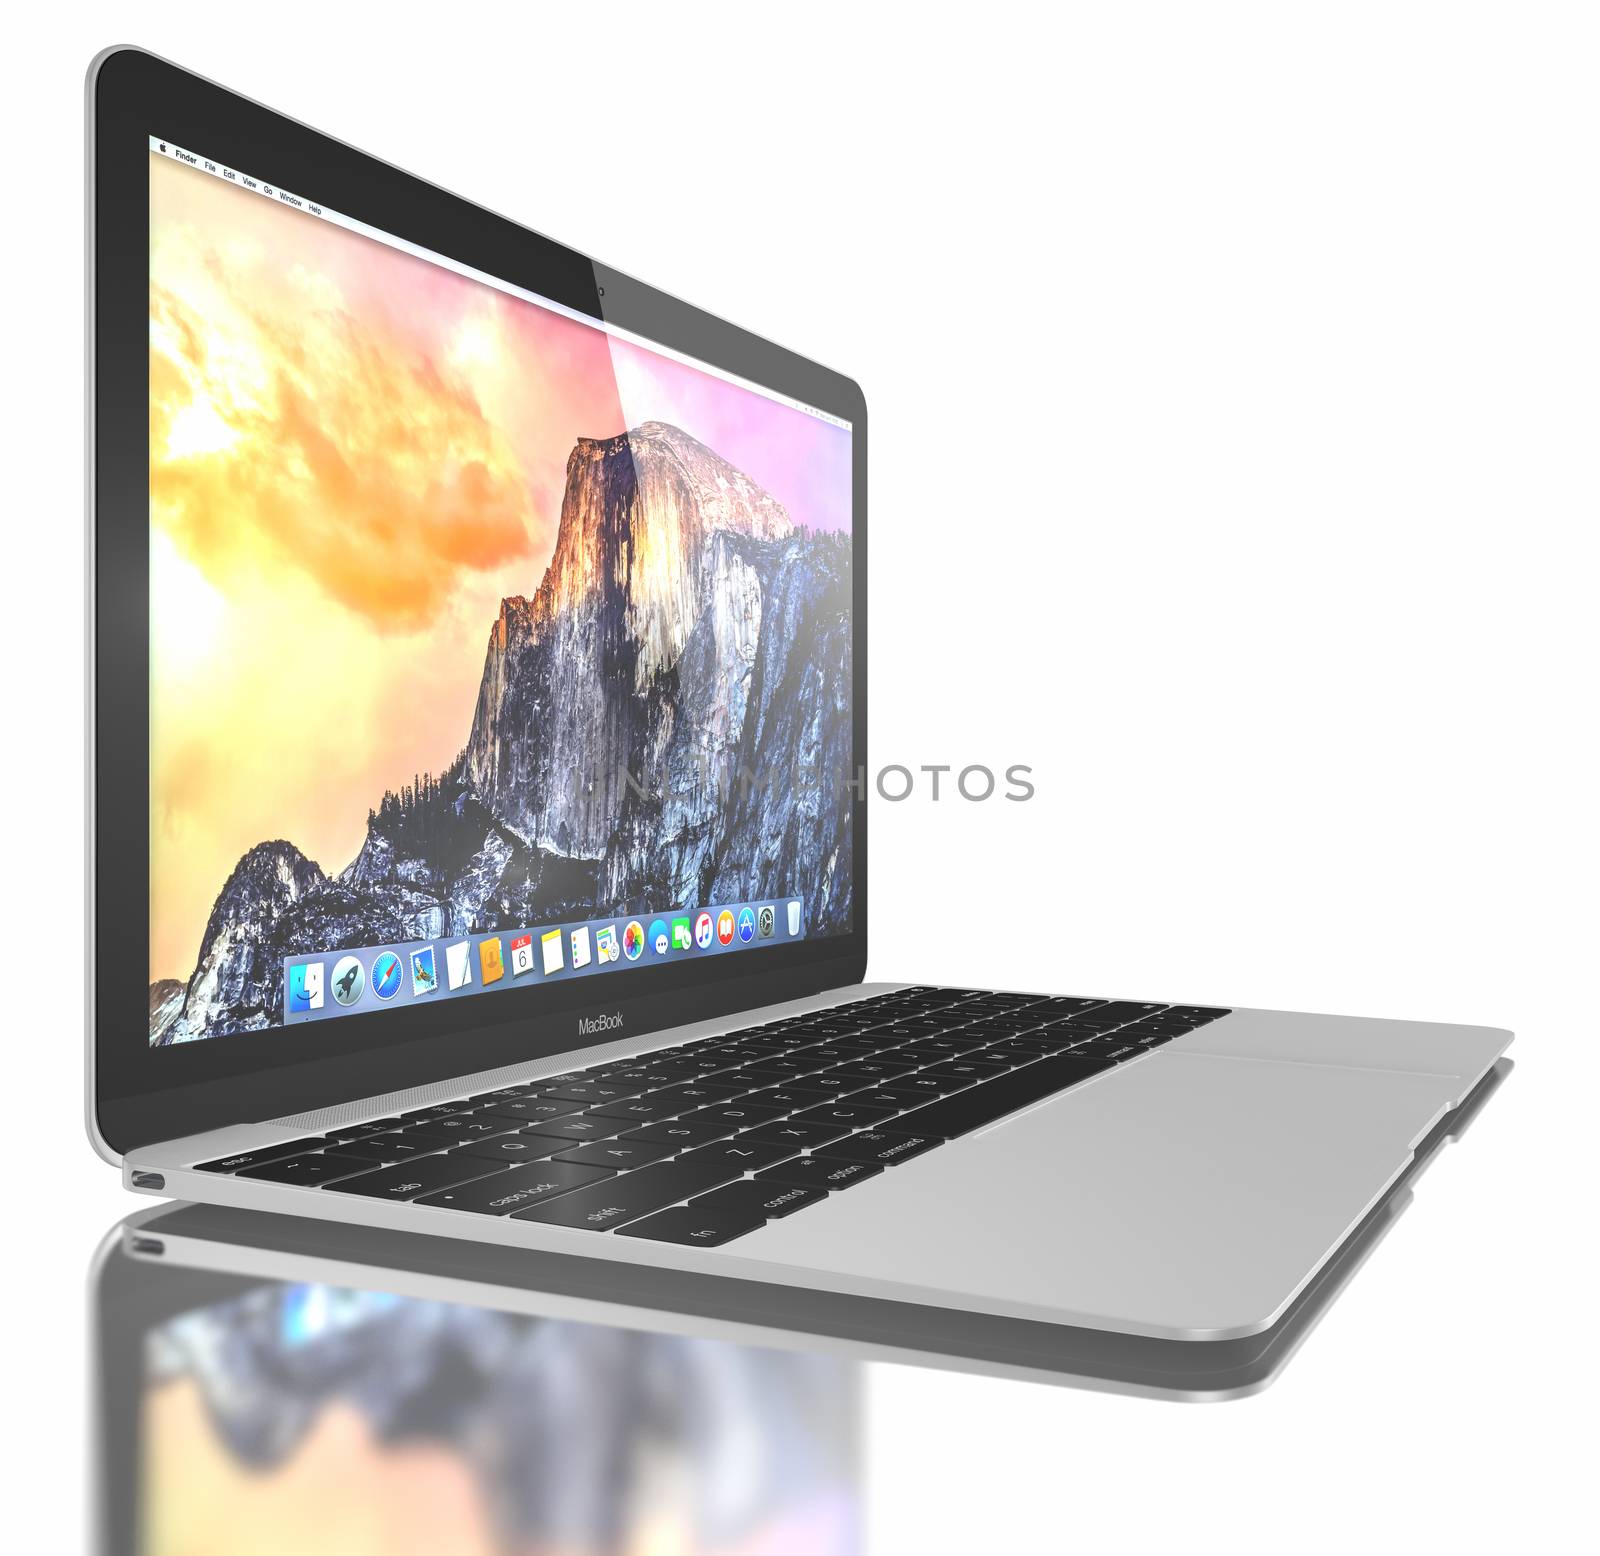 New Silver MacBook Air by manaemedia